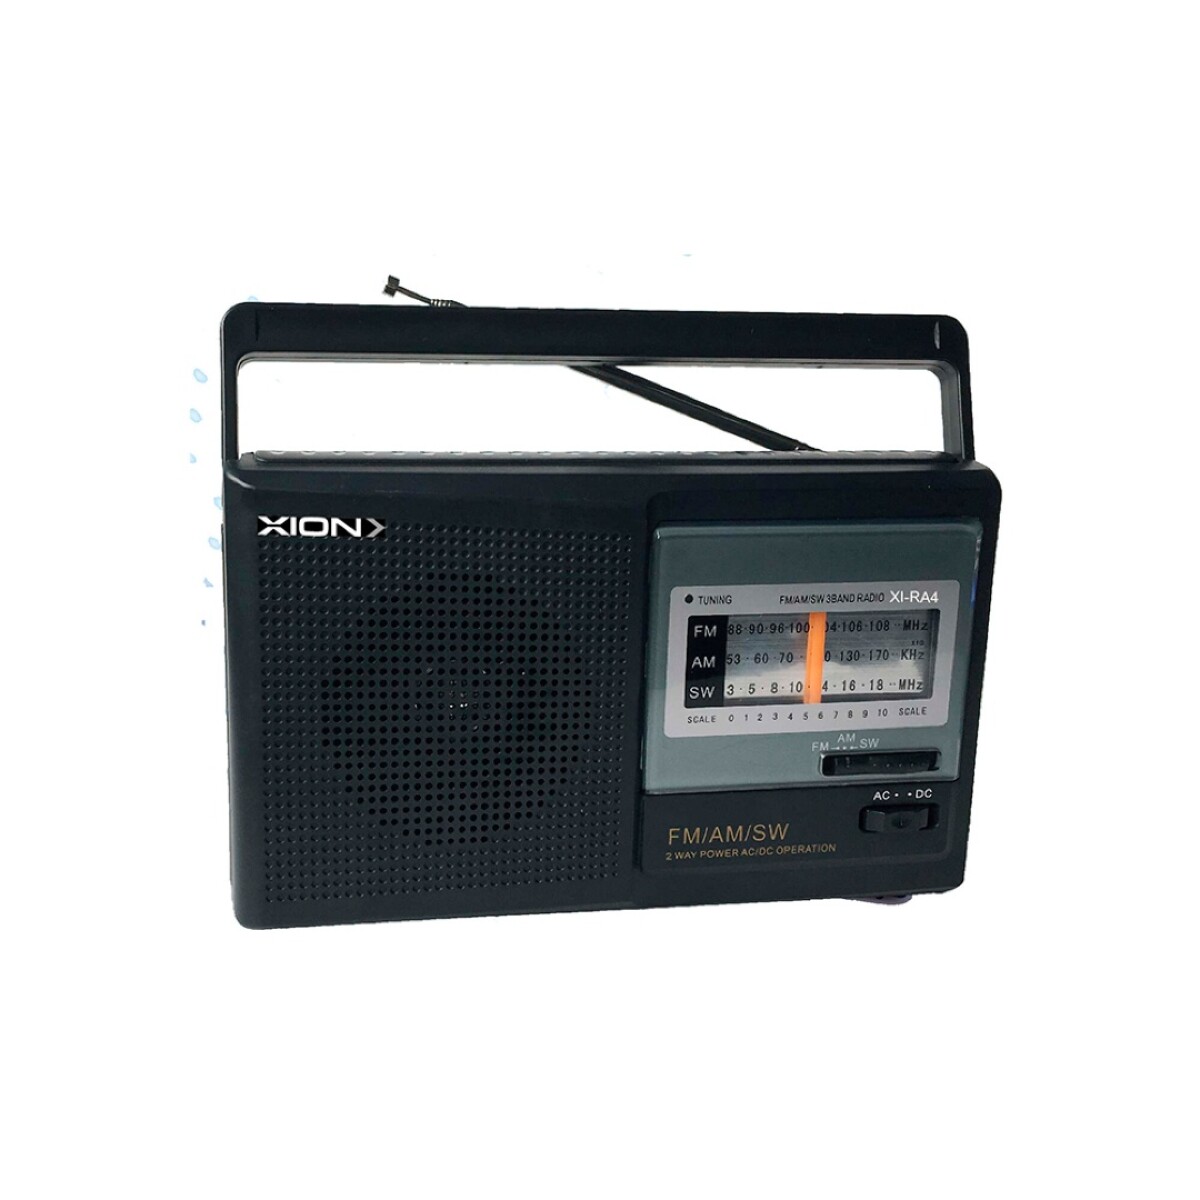 RADIO PORTATIL XION AM/FM XI-RA4 